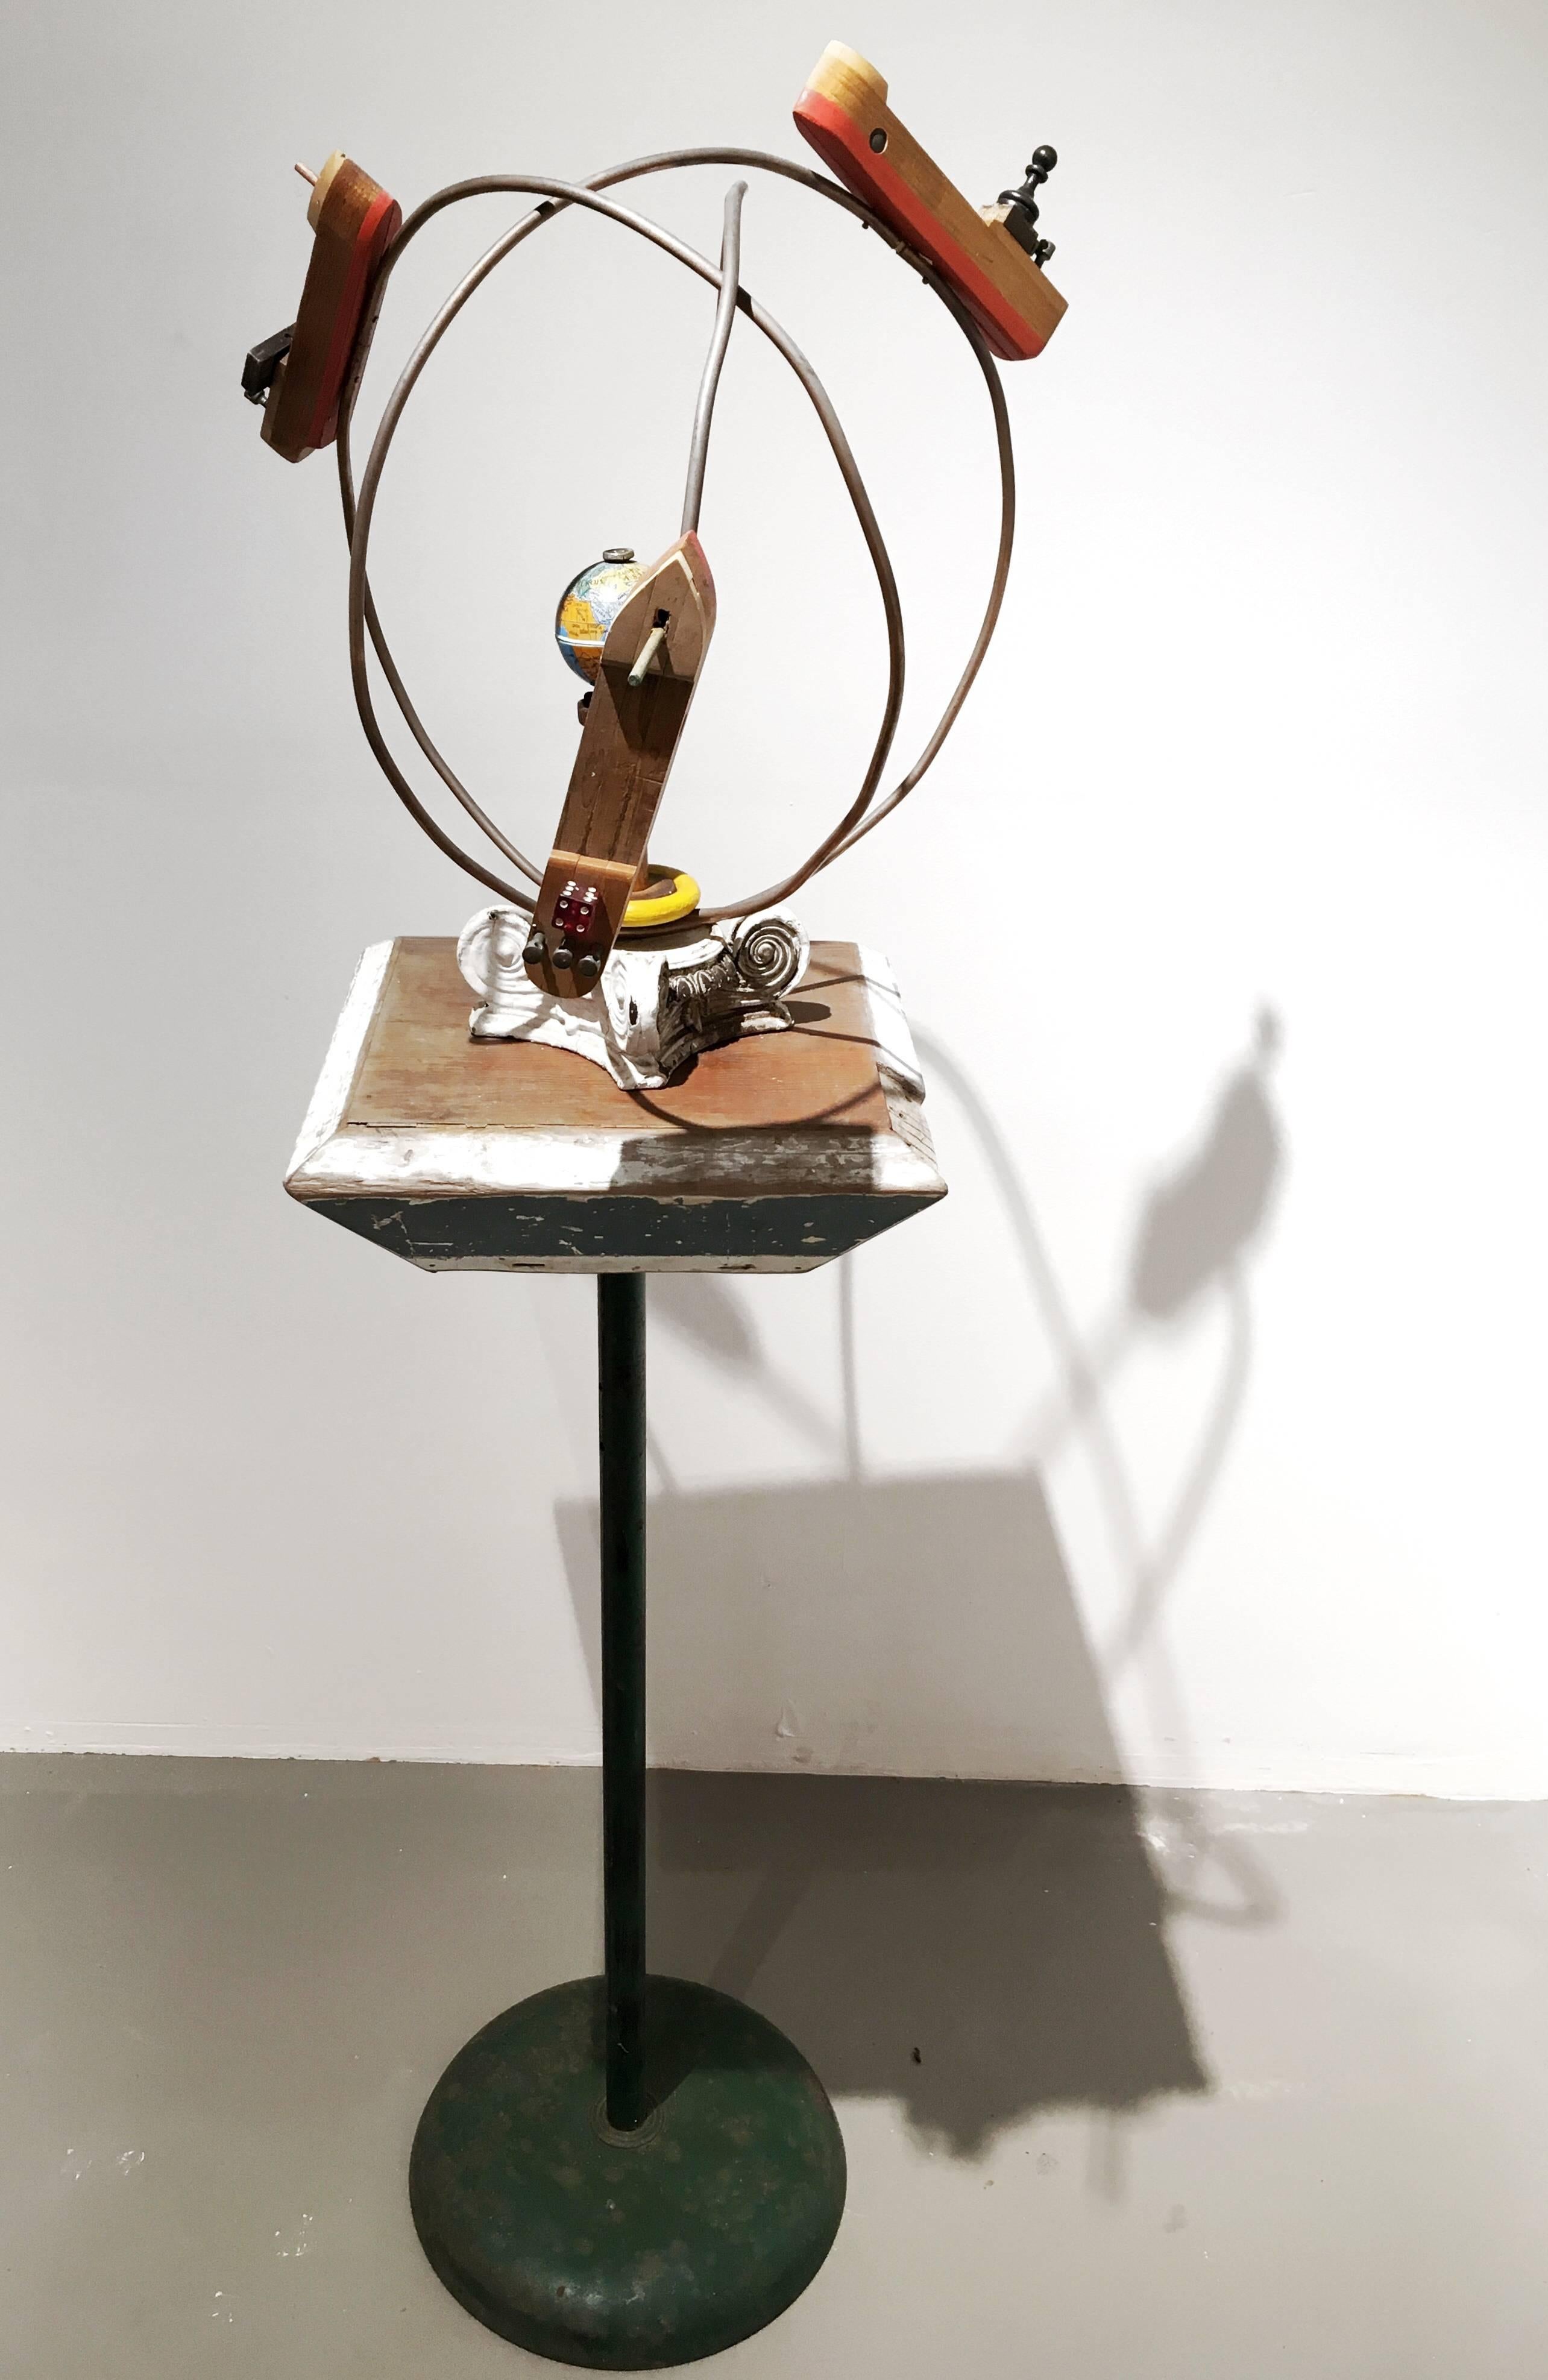 Untitled (assemblage) - Sculpture by Doug Britt